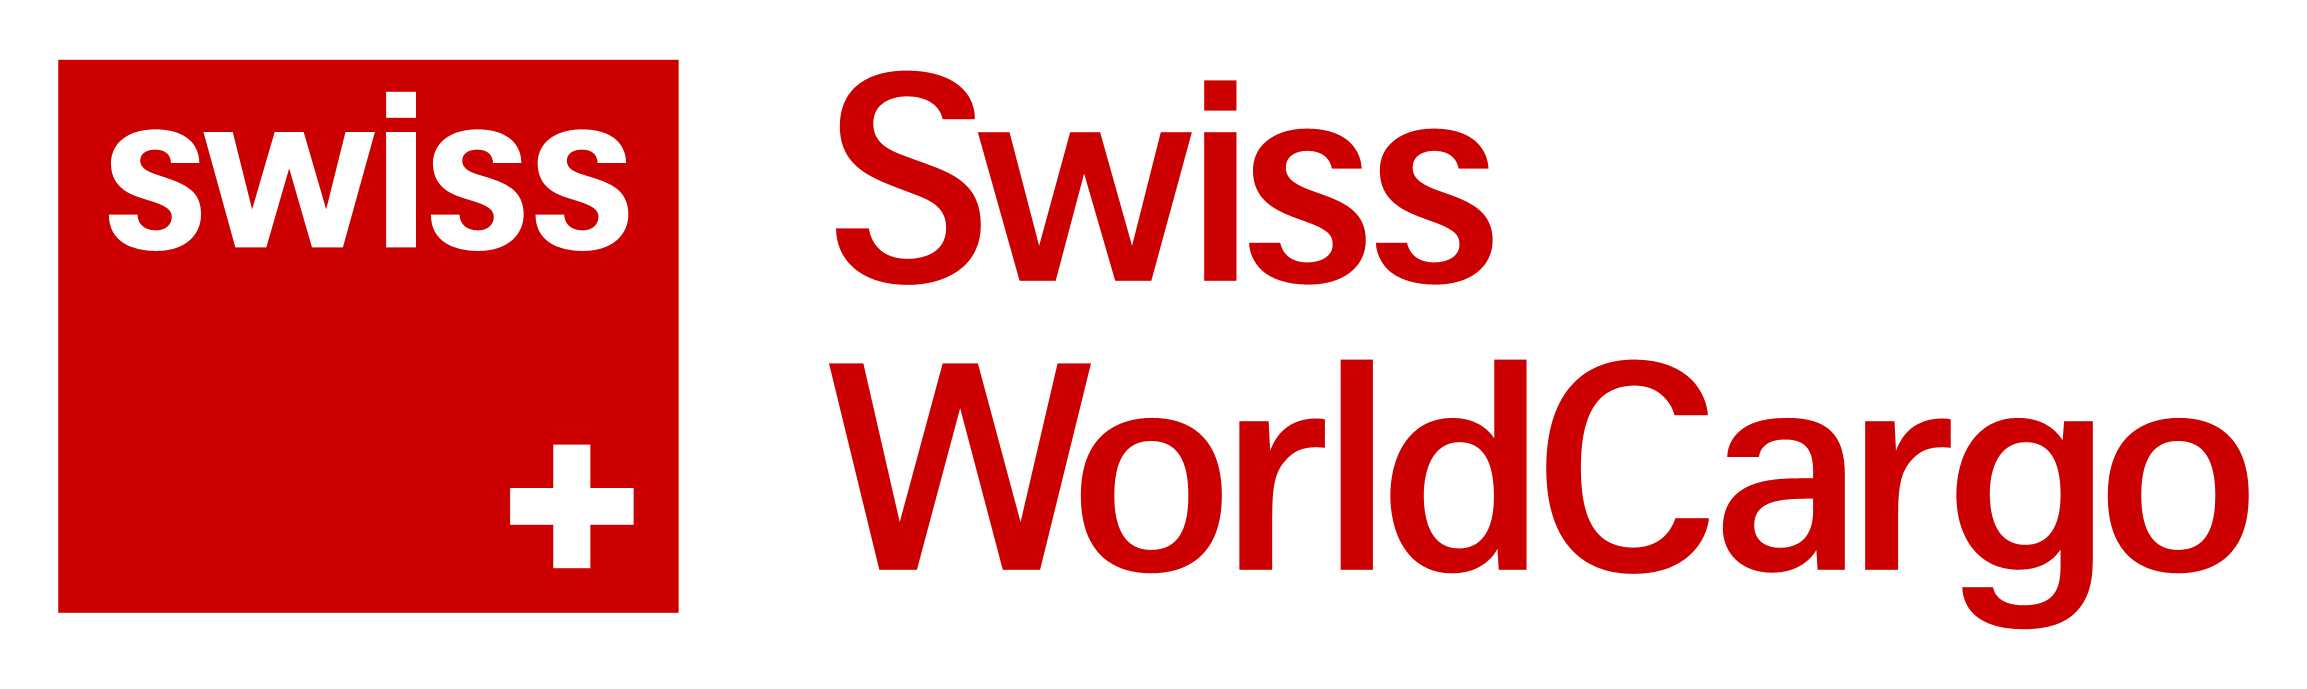 Swiss_WorldCargo.jpg